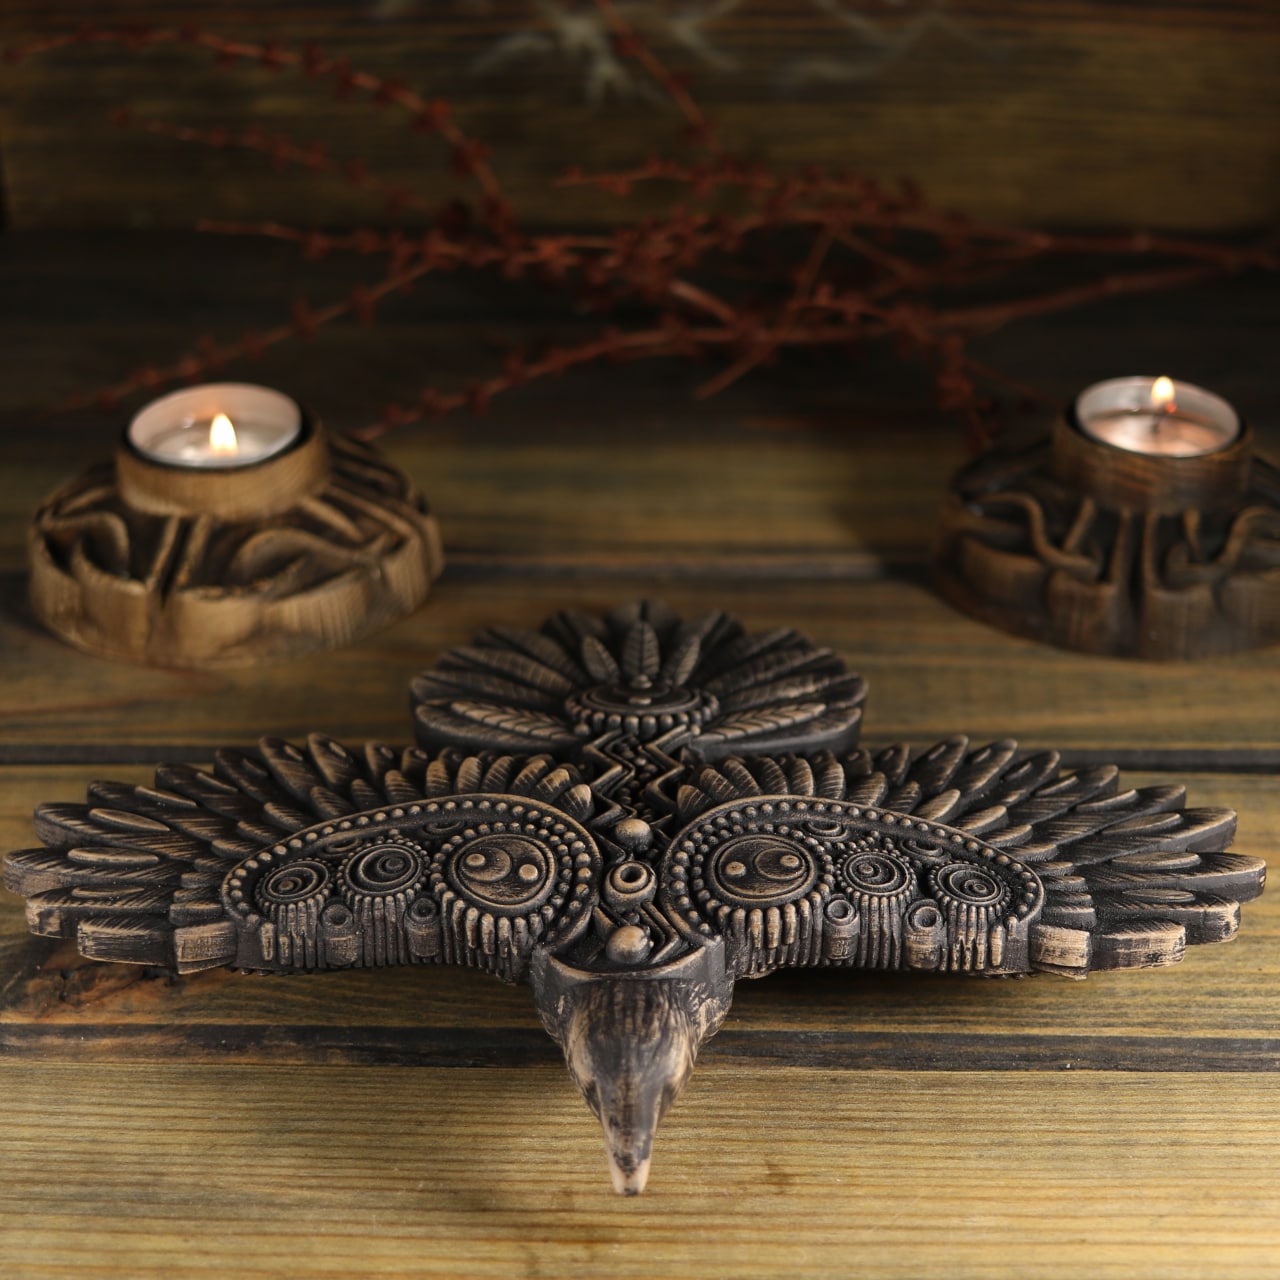 Raven, Norse mythology, wooden statue, wooden animal